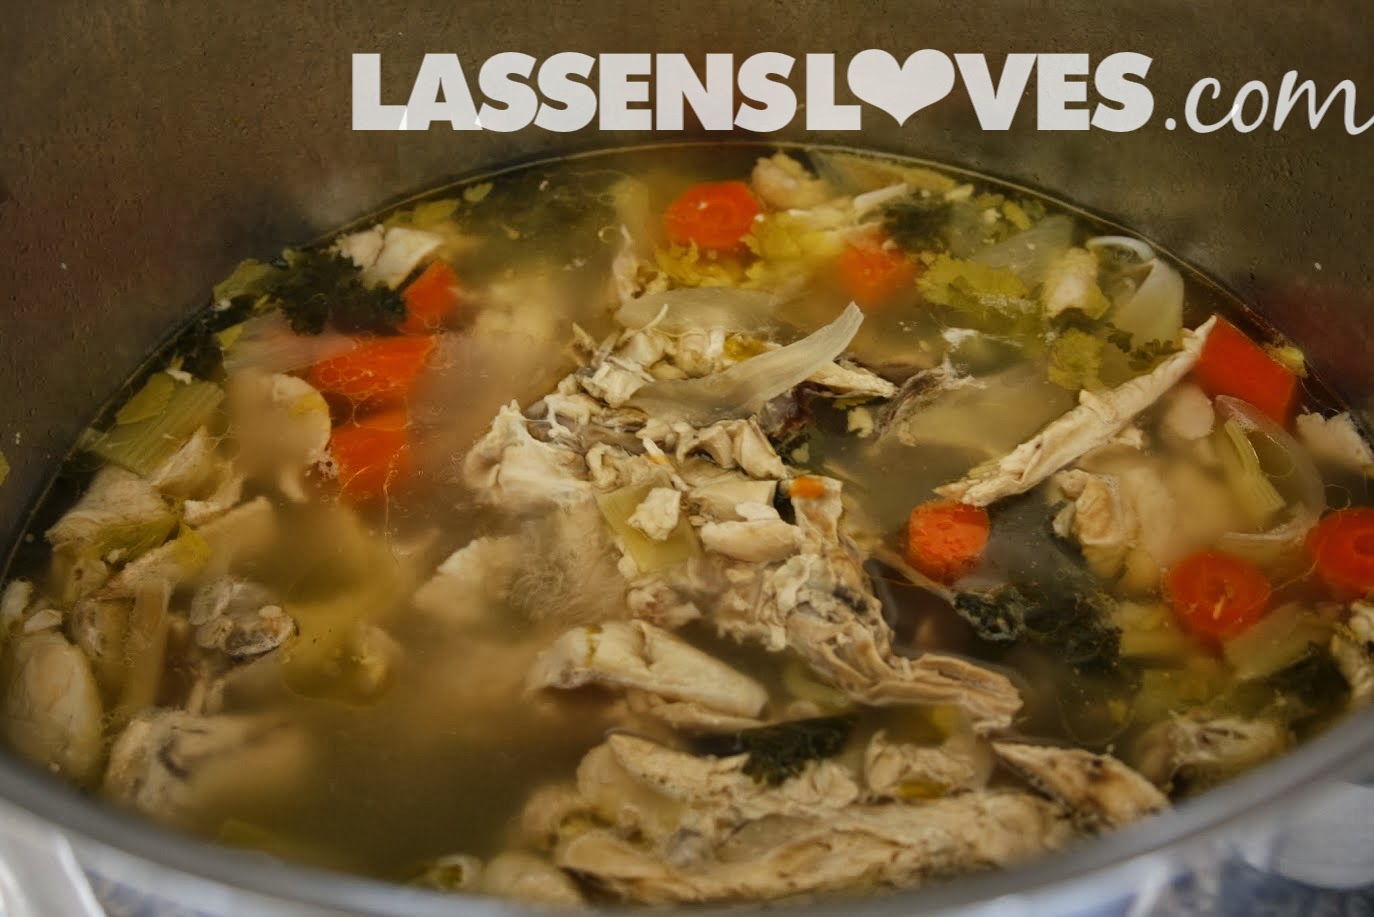  lassensloves.com, Lassen's, Chicken+broth+ingredients, Chicken+soup